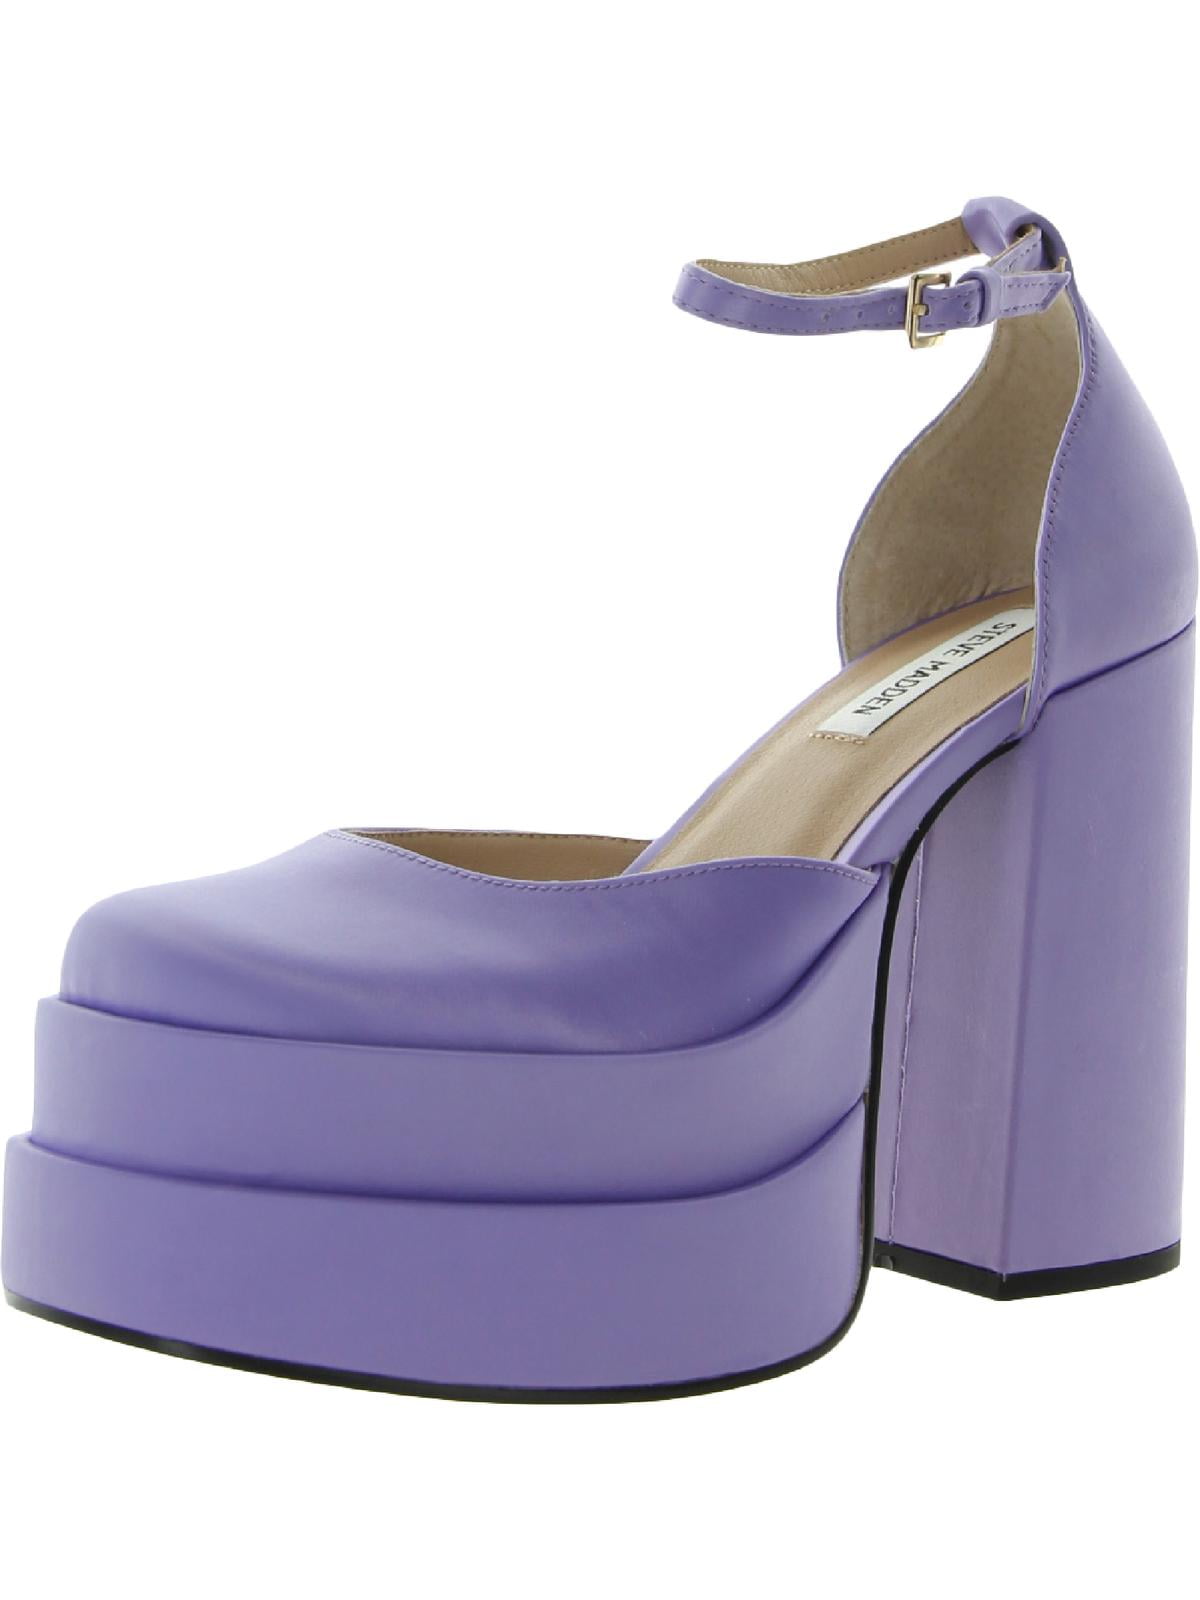 Steve Madden Charlize Purple Satin Block Heel Ankle Strap Squared Toe Pumps  (Purple Satin, 10) 